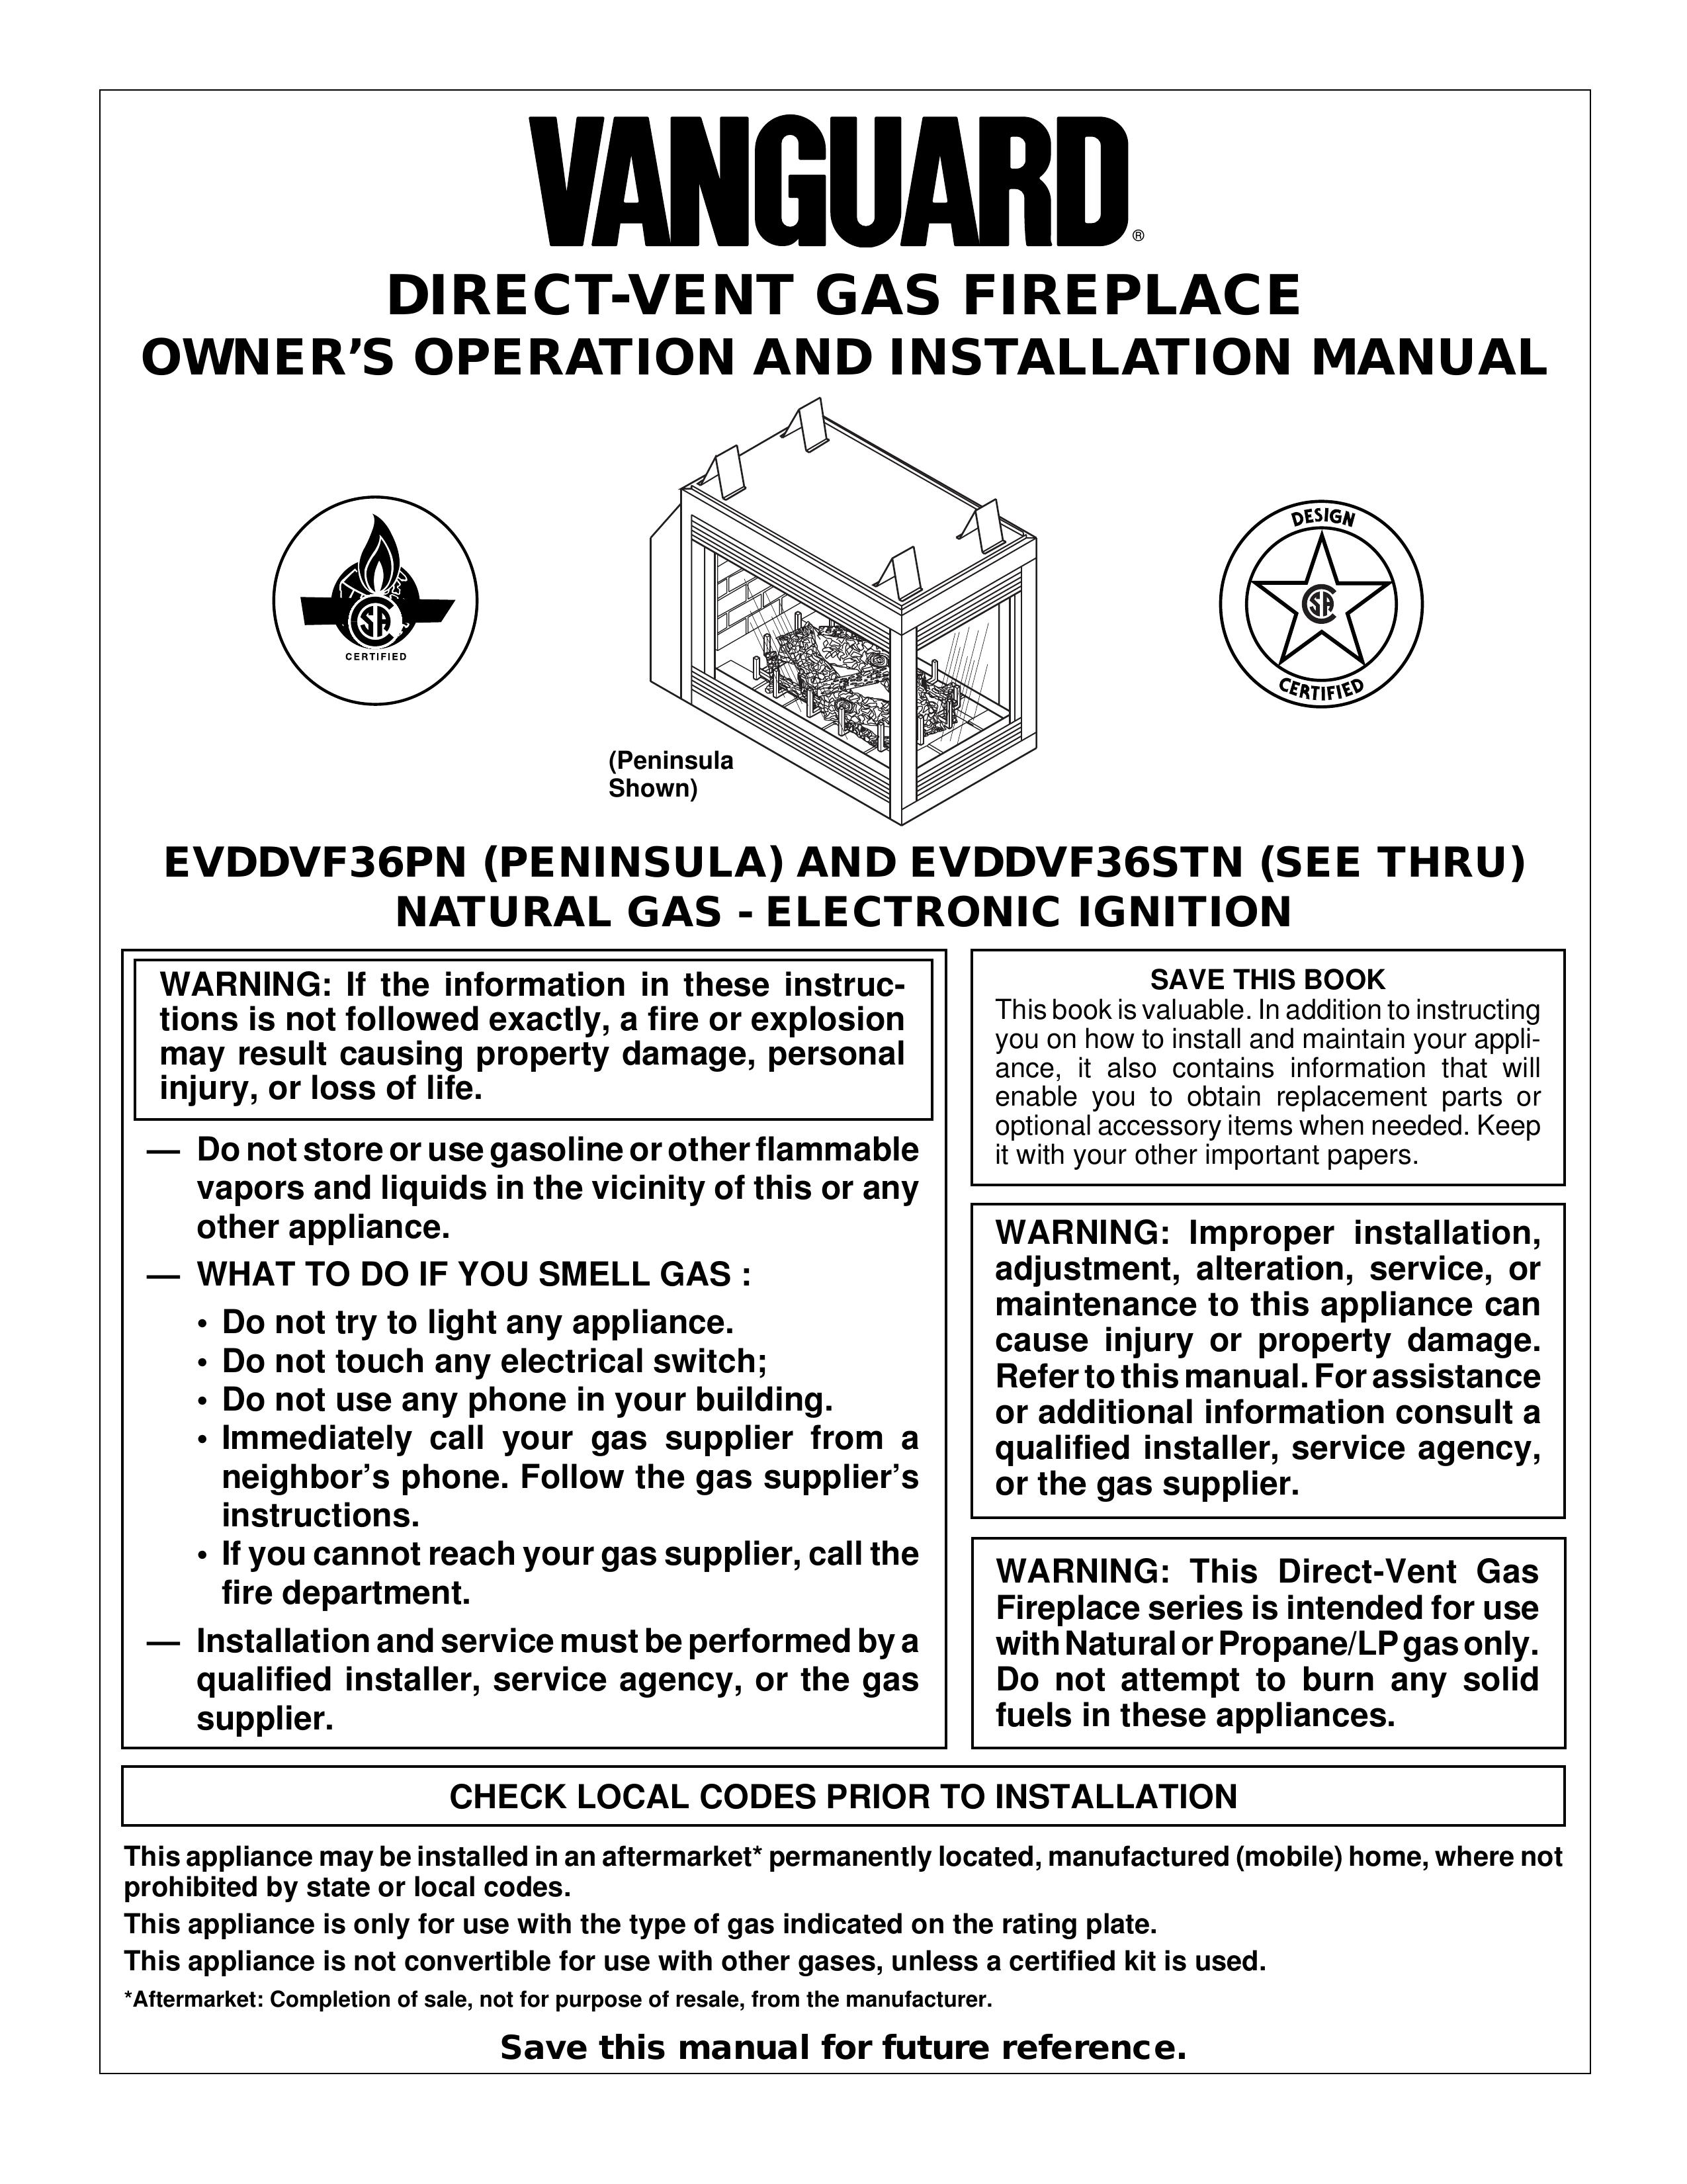 Desa EVDDVF36STN Fire Pit User Manual